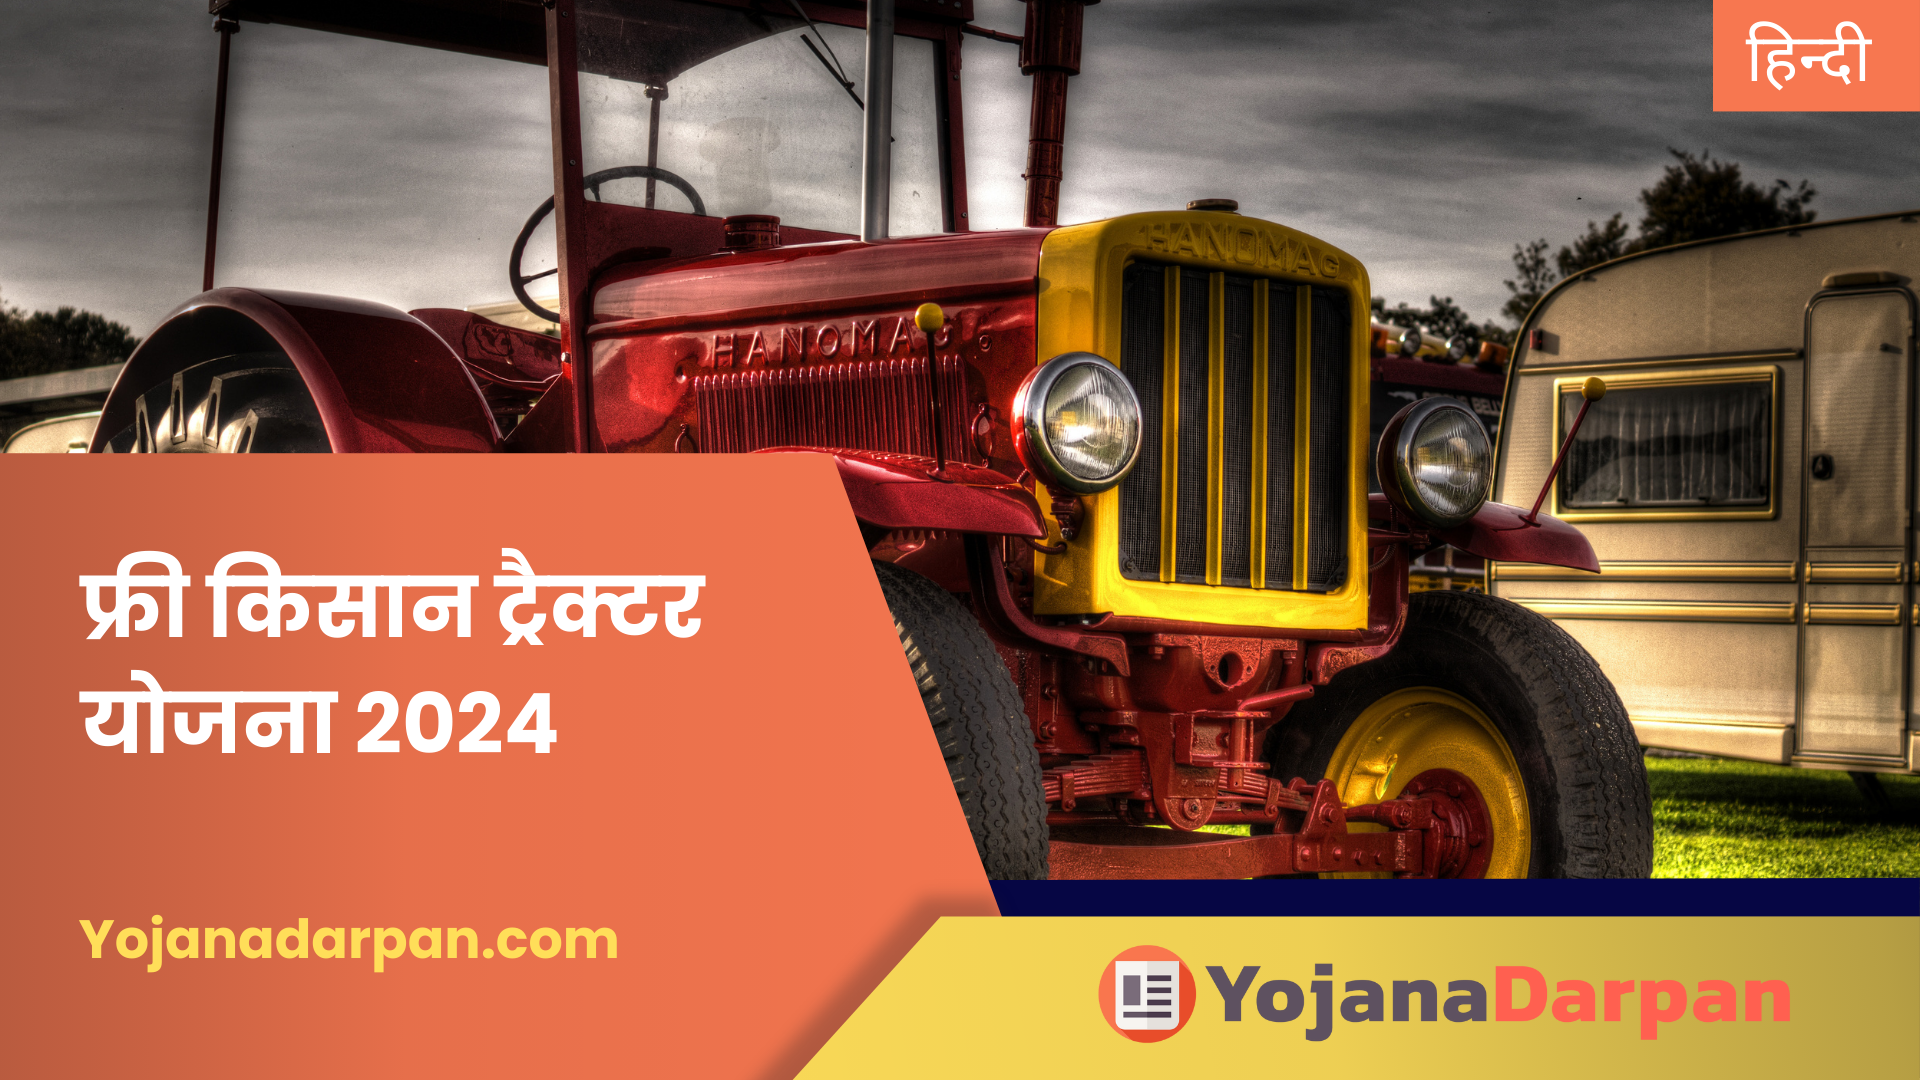 Free Kisan Tractor Yojana